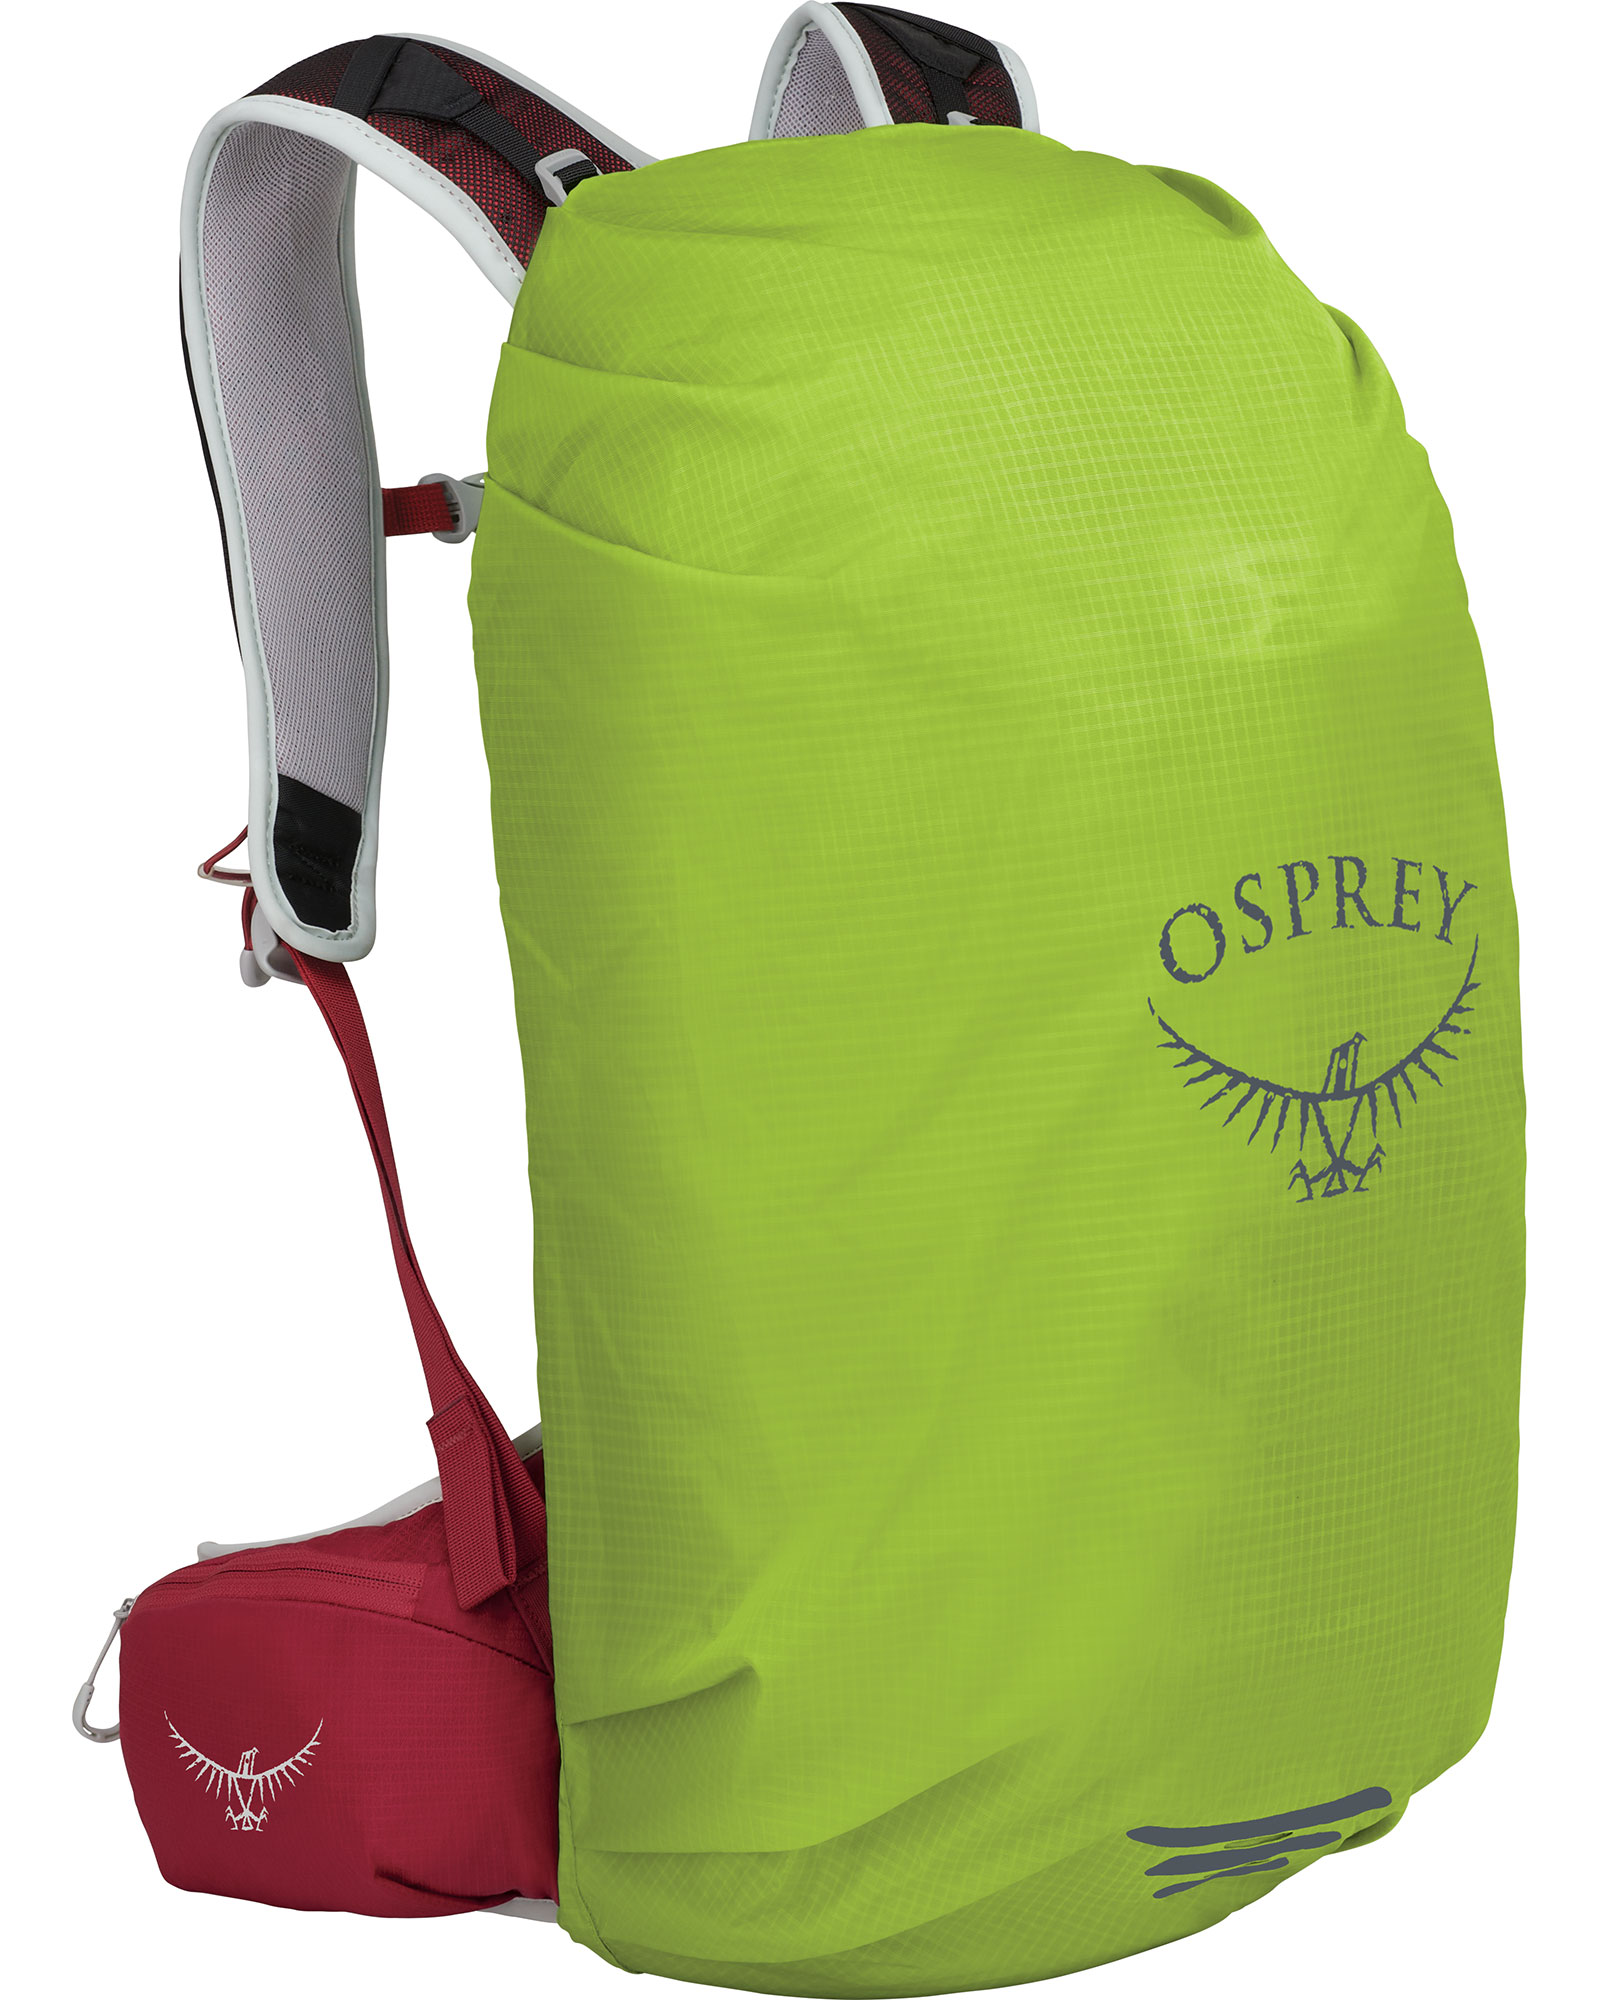 Osprey Hi Vis Raincover X Small - Limon Green